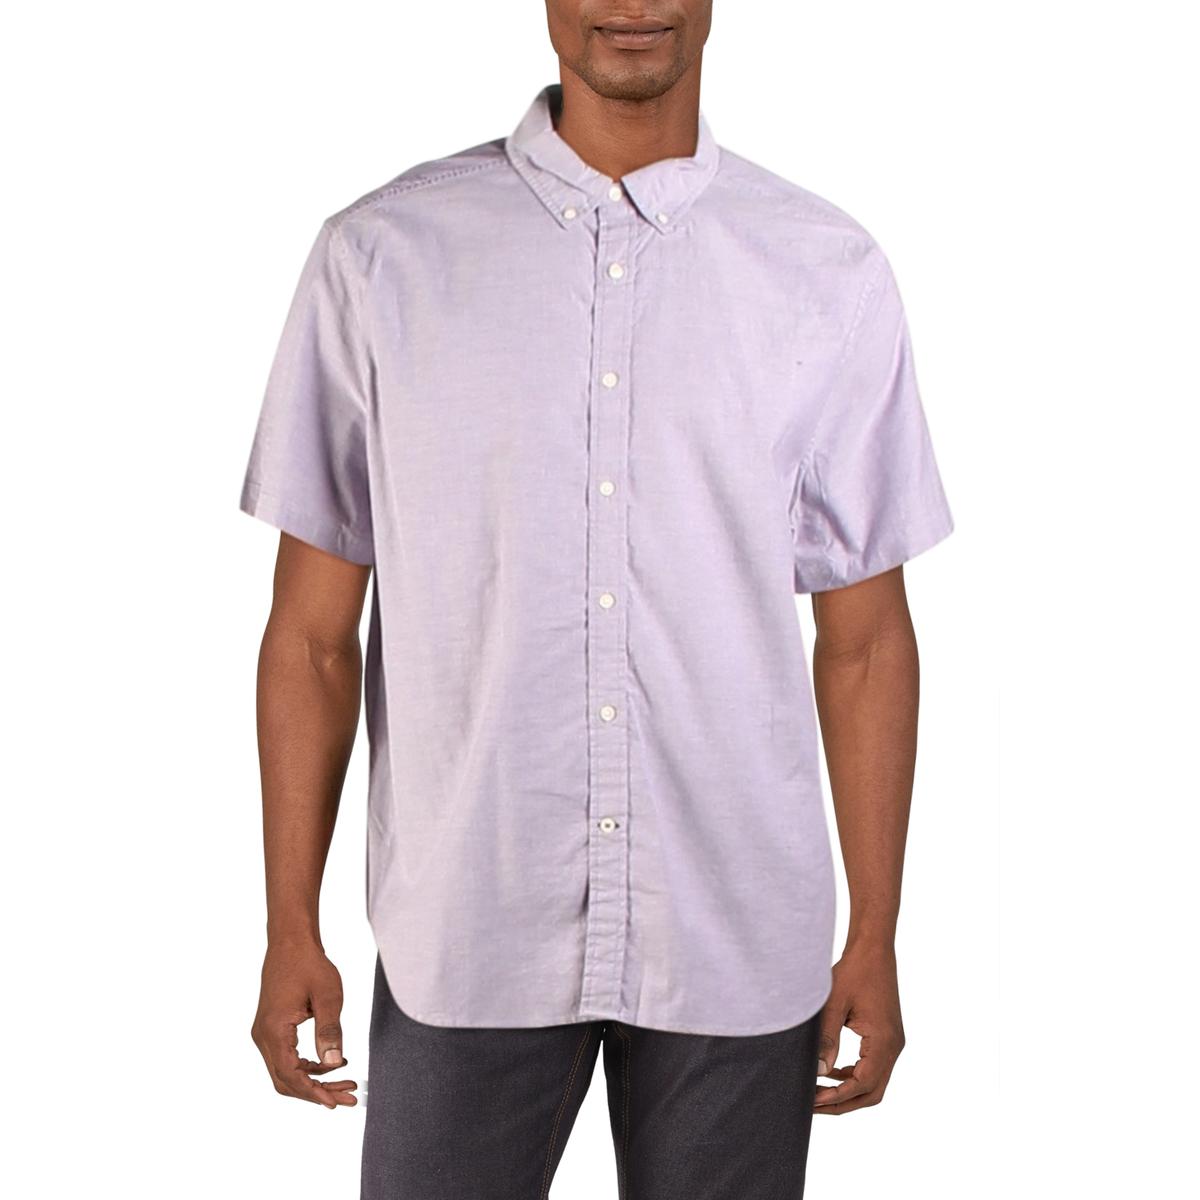 Nautica Mens Cotton Classic-Fit Stretch Casual Shirt BHFO 0279 | eBay